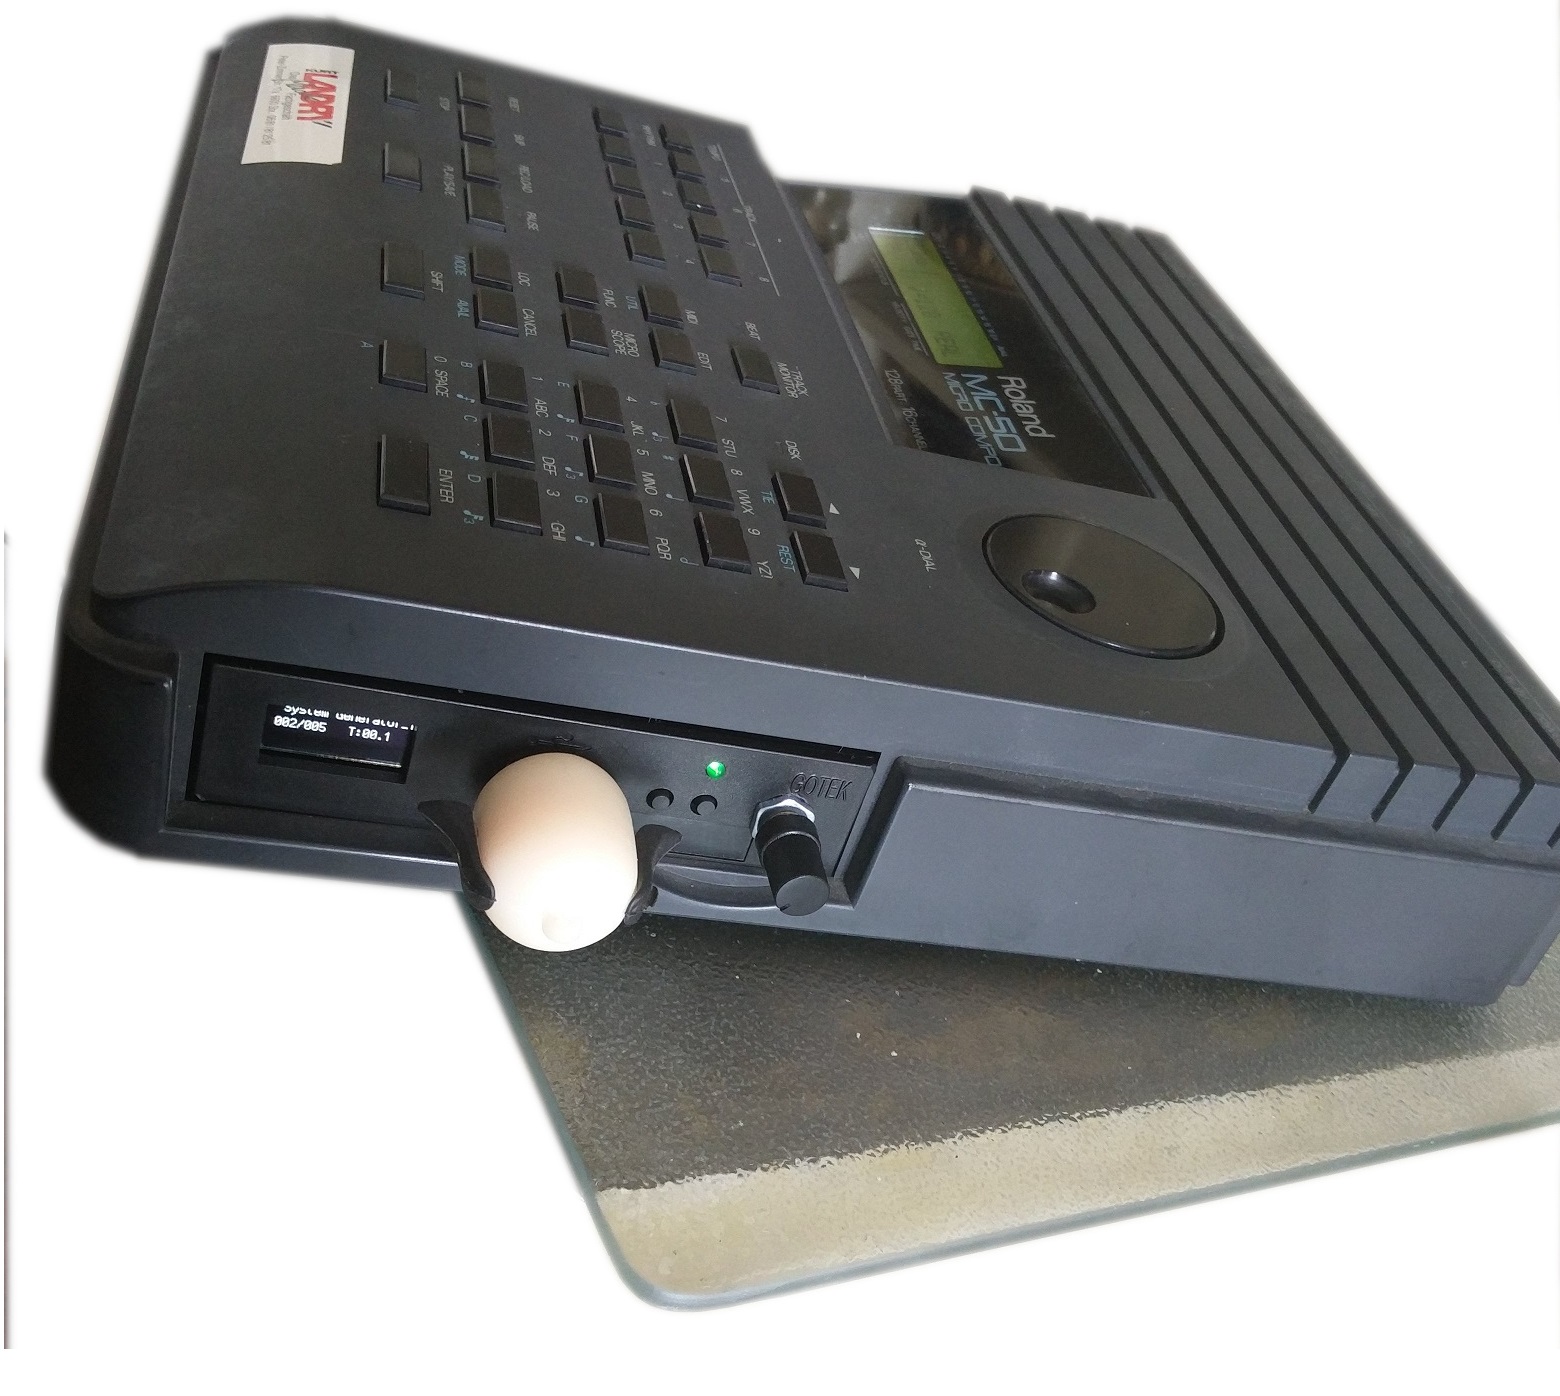 Floppy Drive Emulator USB for Roland MC and MC Mk II incl. + Disks